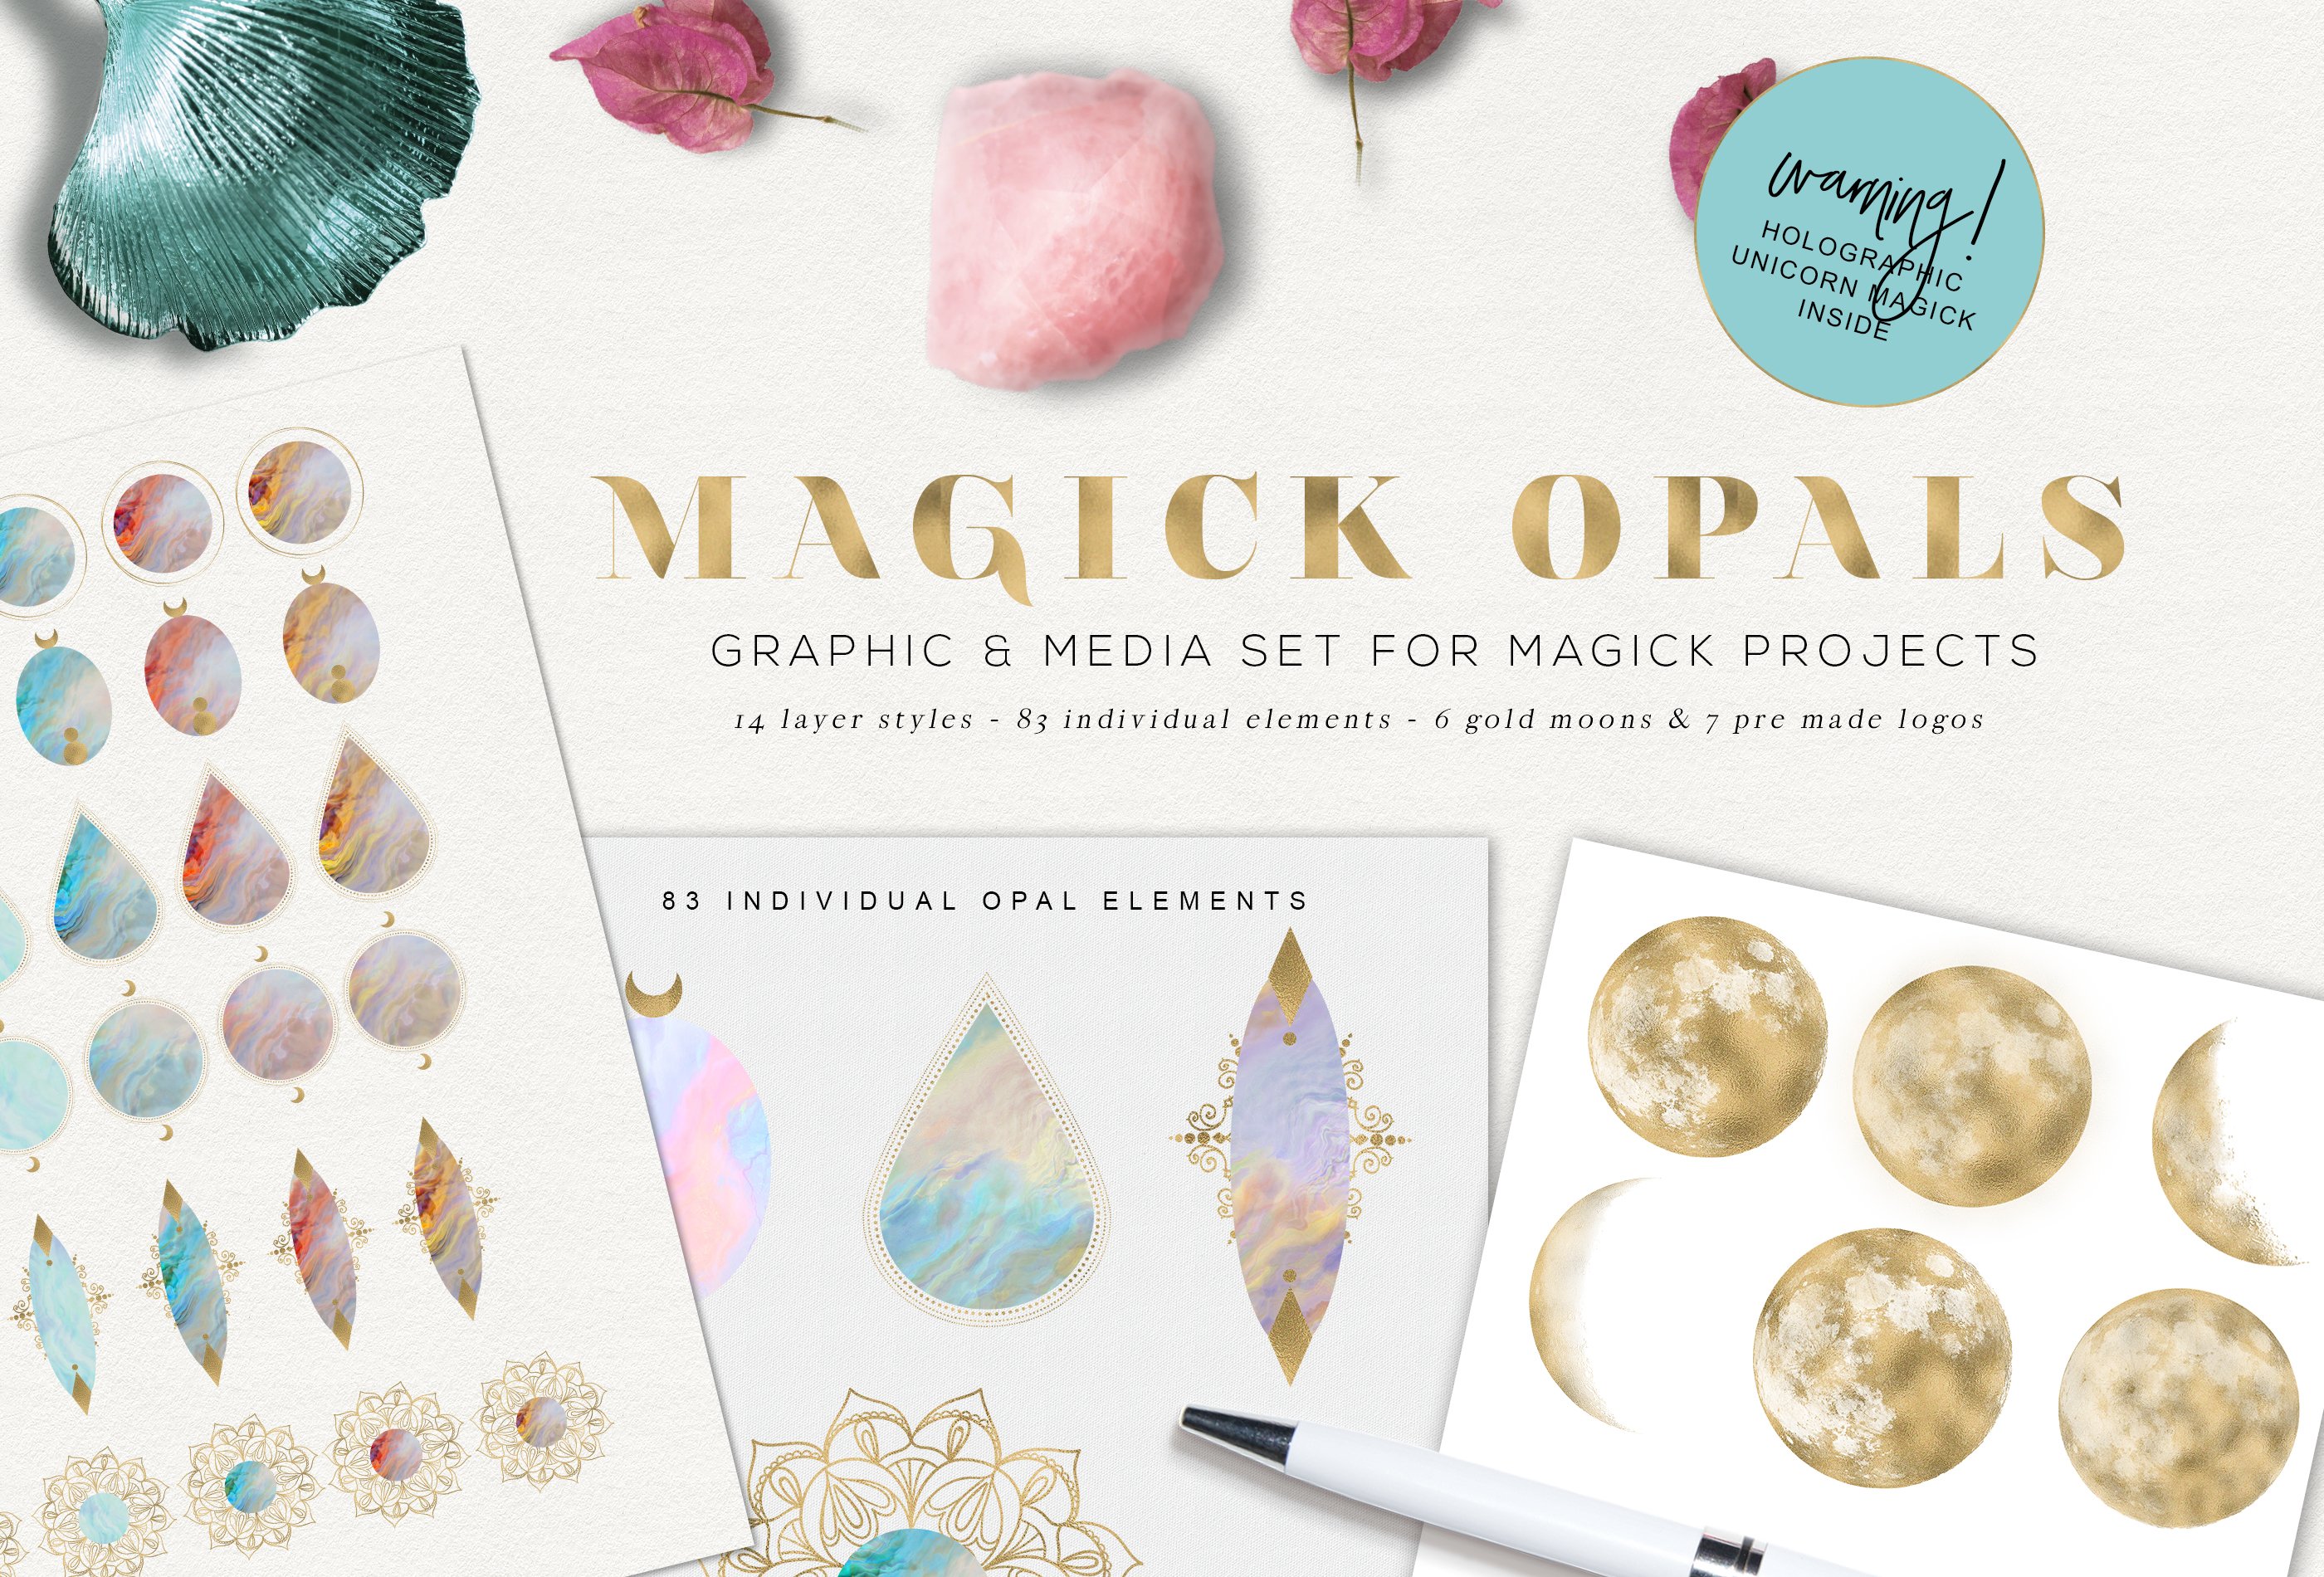 Magick Opals - graphic set cover image.